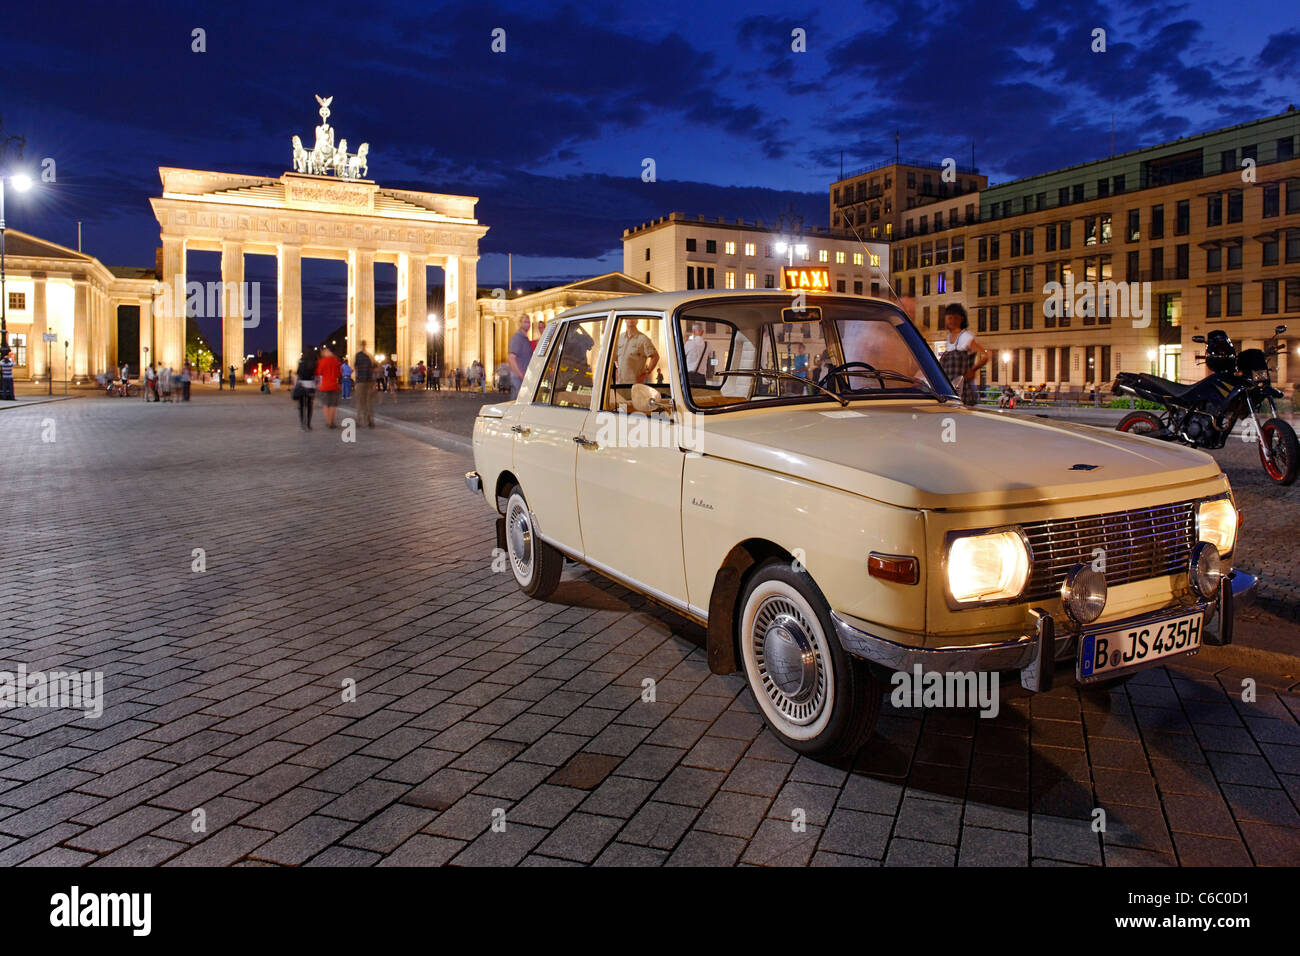 Wartburg 353 Deluxe, built in 1967, classic car, historic vehicle, taxi, Pariser Platz square, the Brandenburg Gate, Berlin Stock Photo